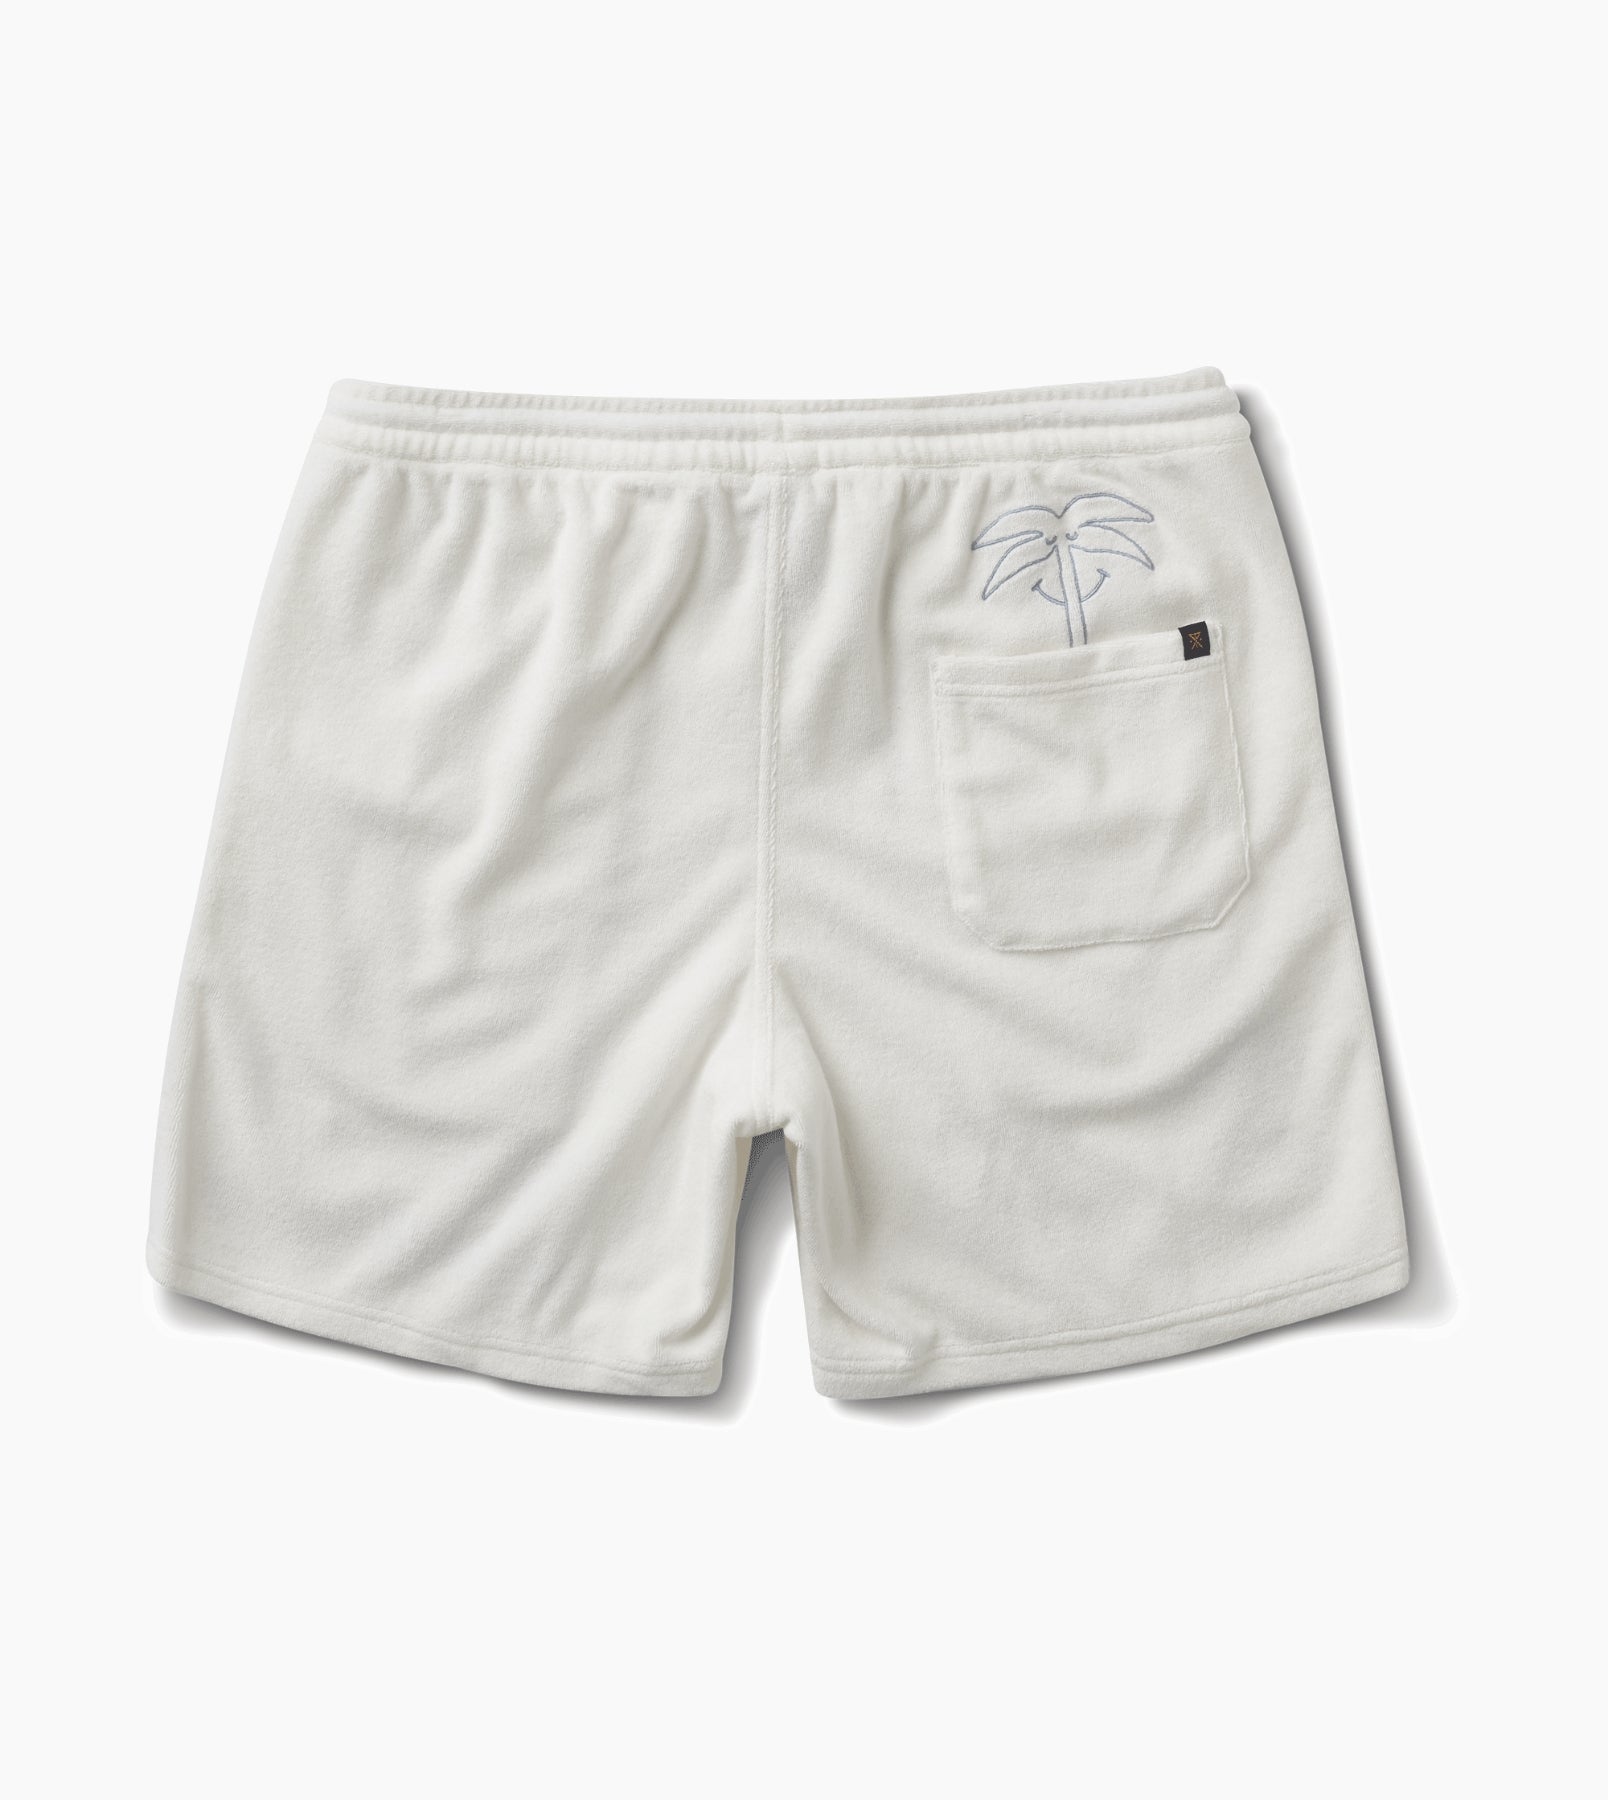 Grotto Shorts